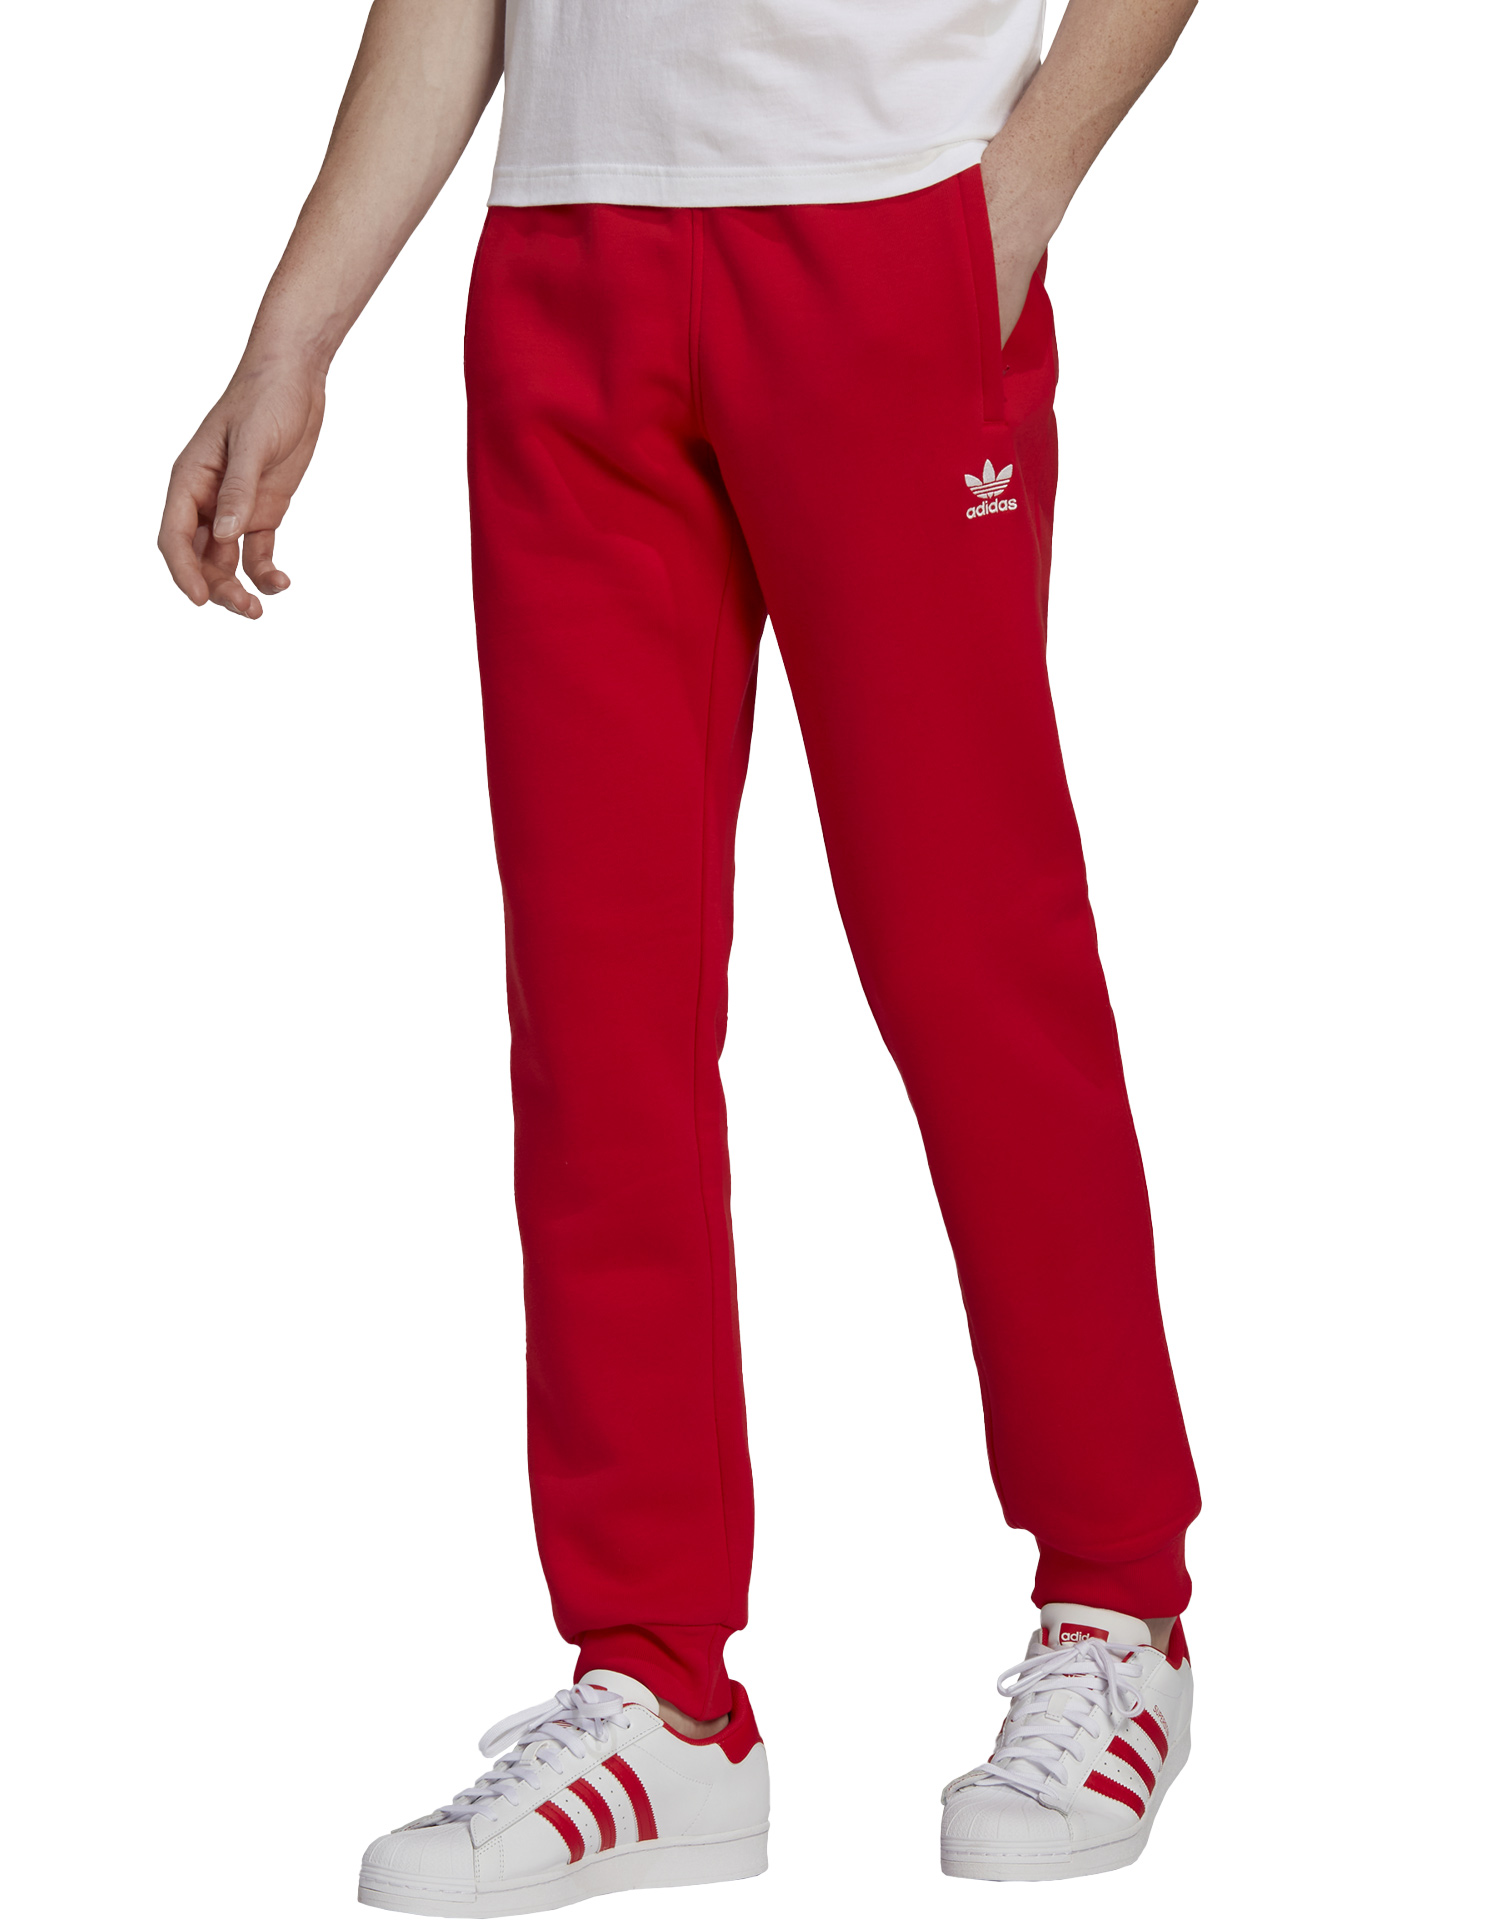 adidas-originals-trefoil-pants-red-white